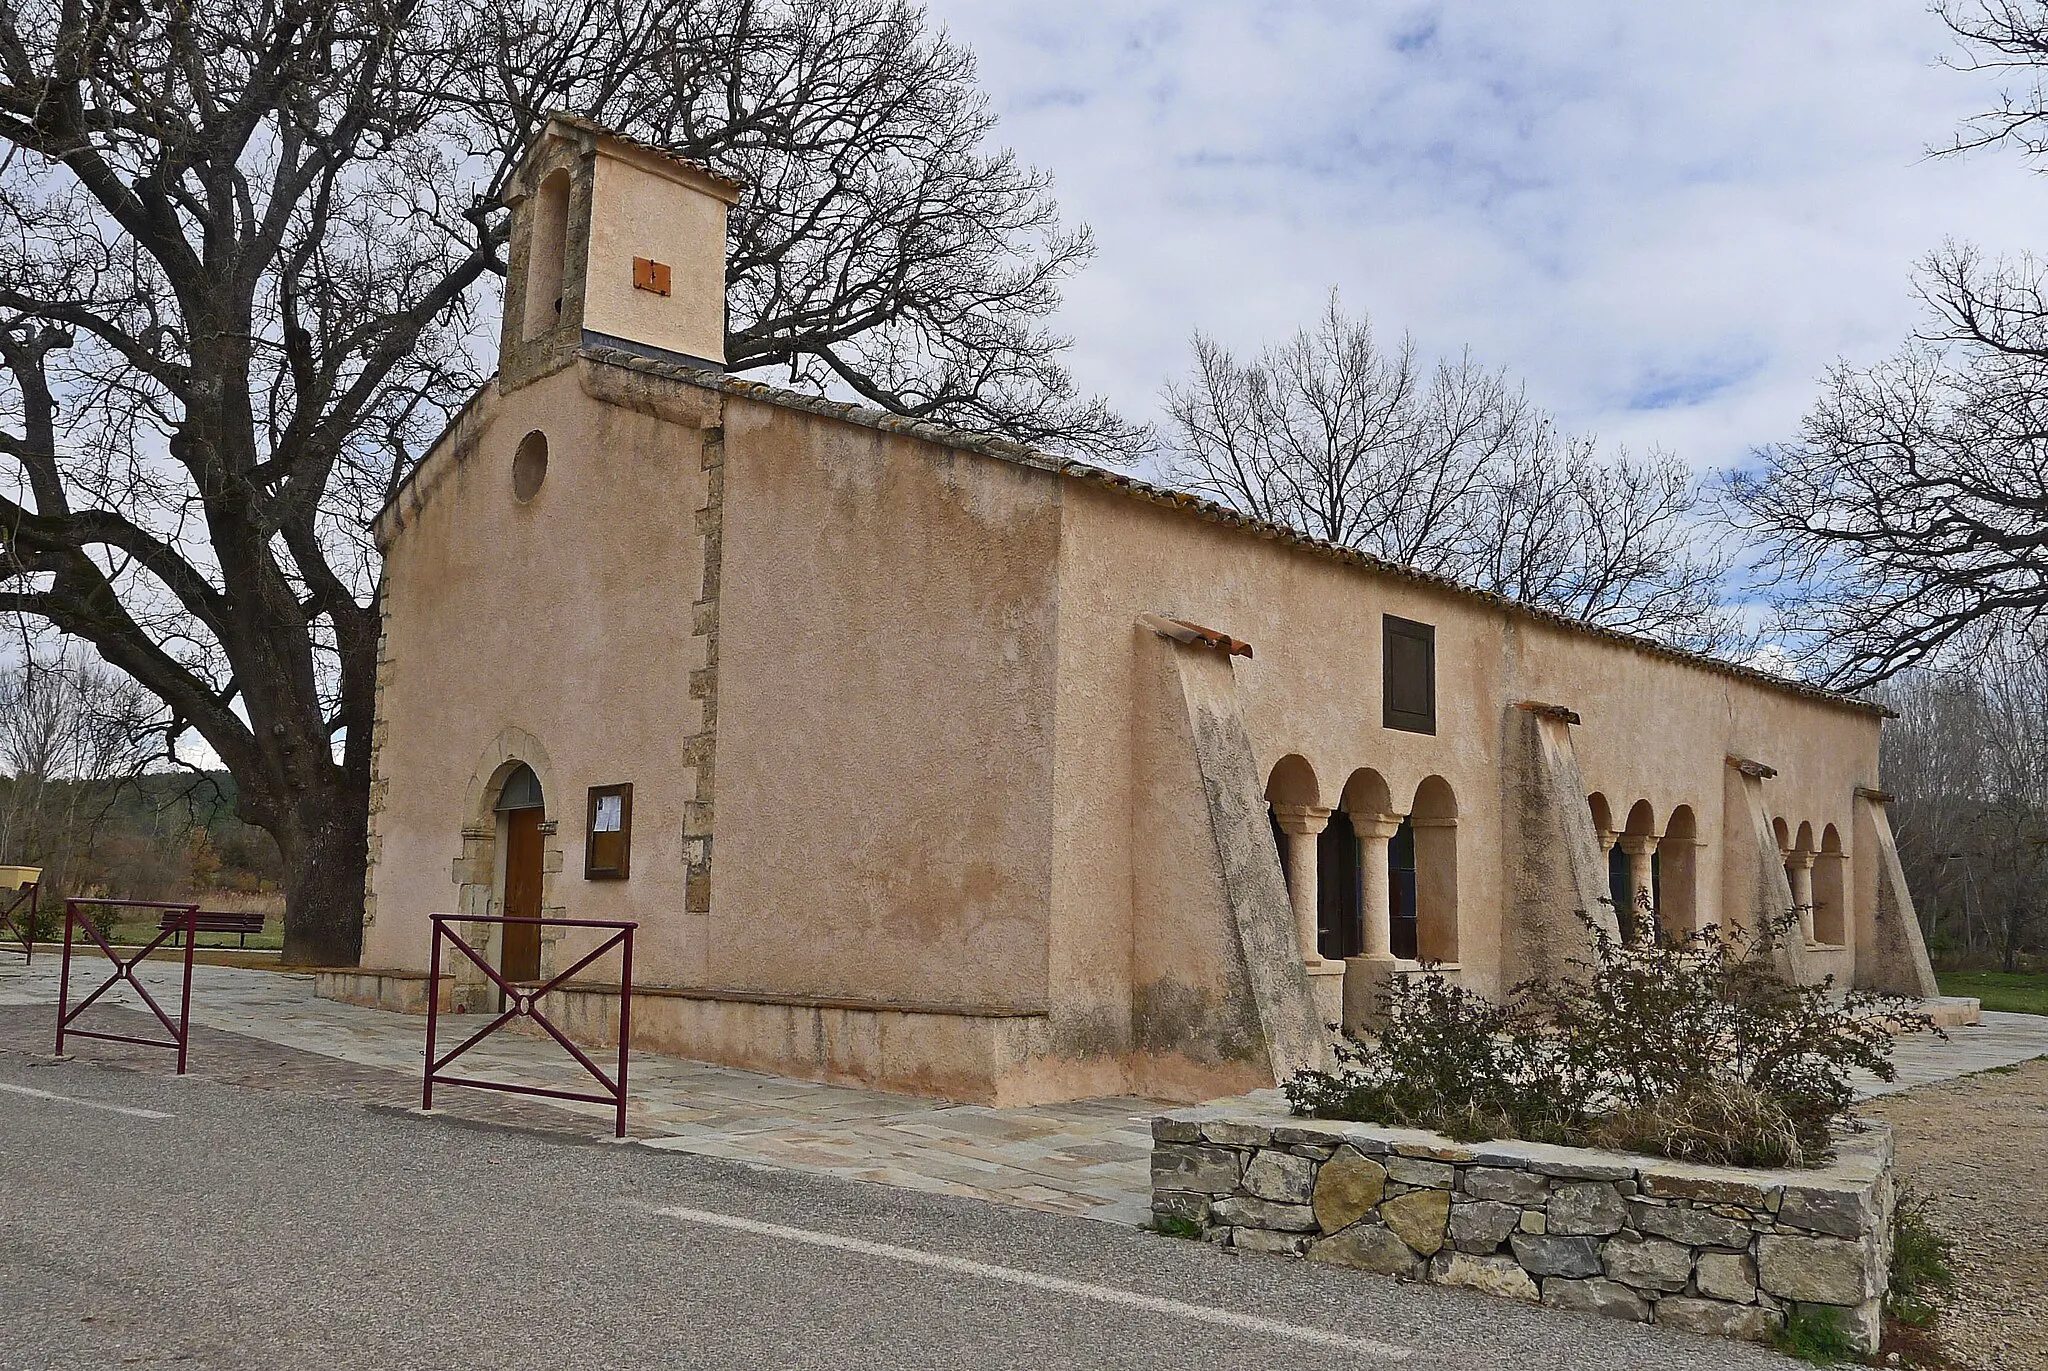 Photo showing: The church of Saint-Antonin-du-Var